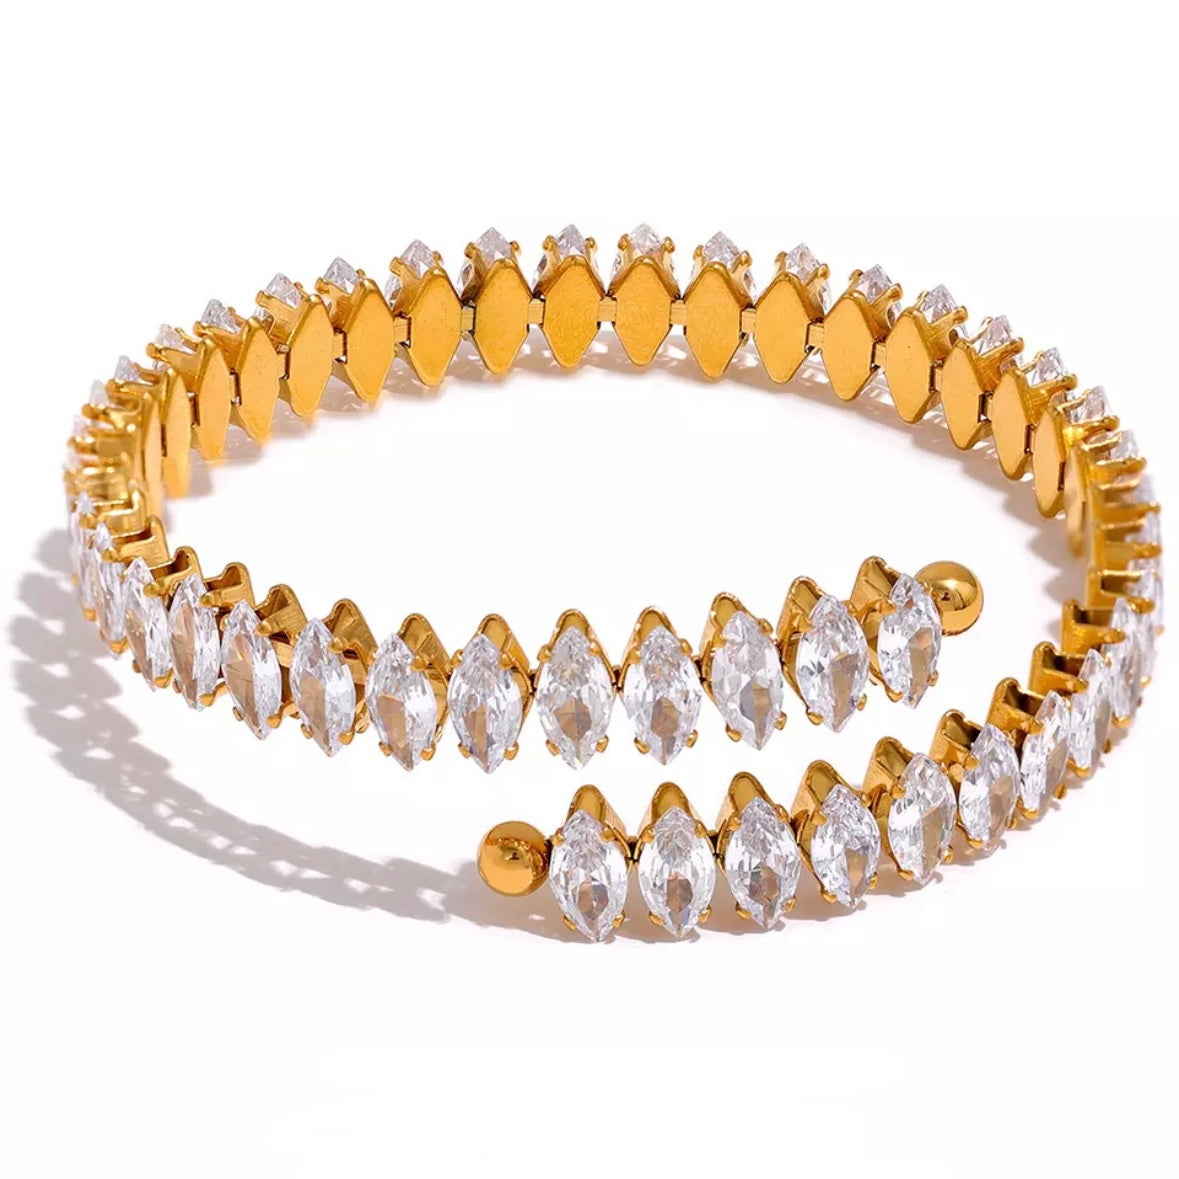 Gorgeous and delicate diamond adjustable cuff bangle bracelet for women in Sydney, Australia